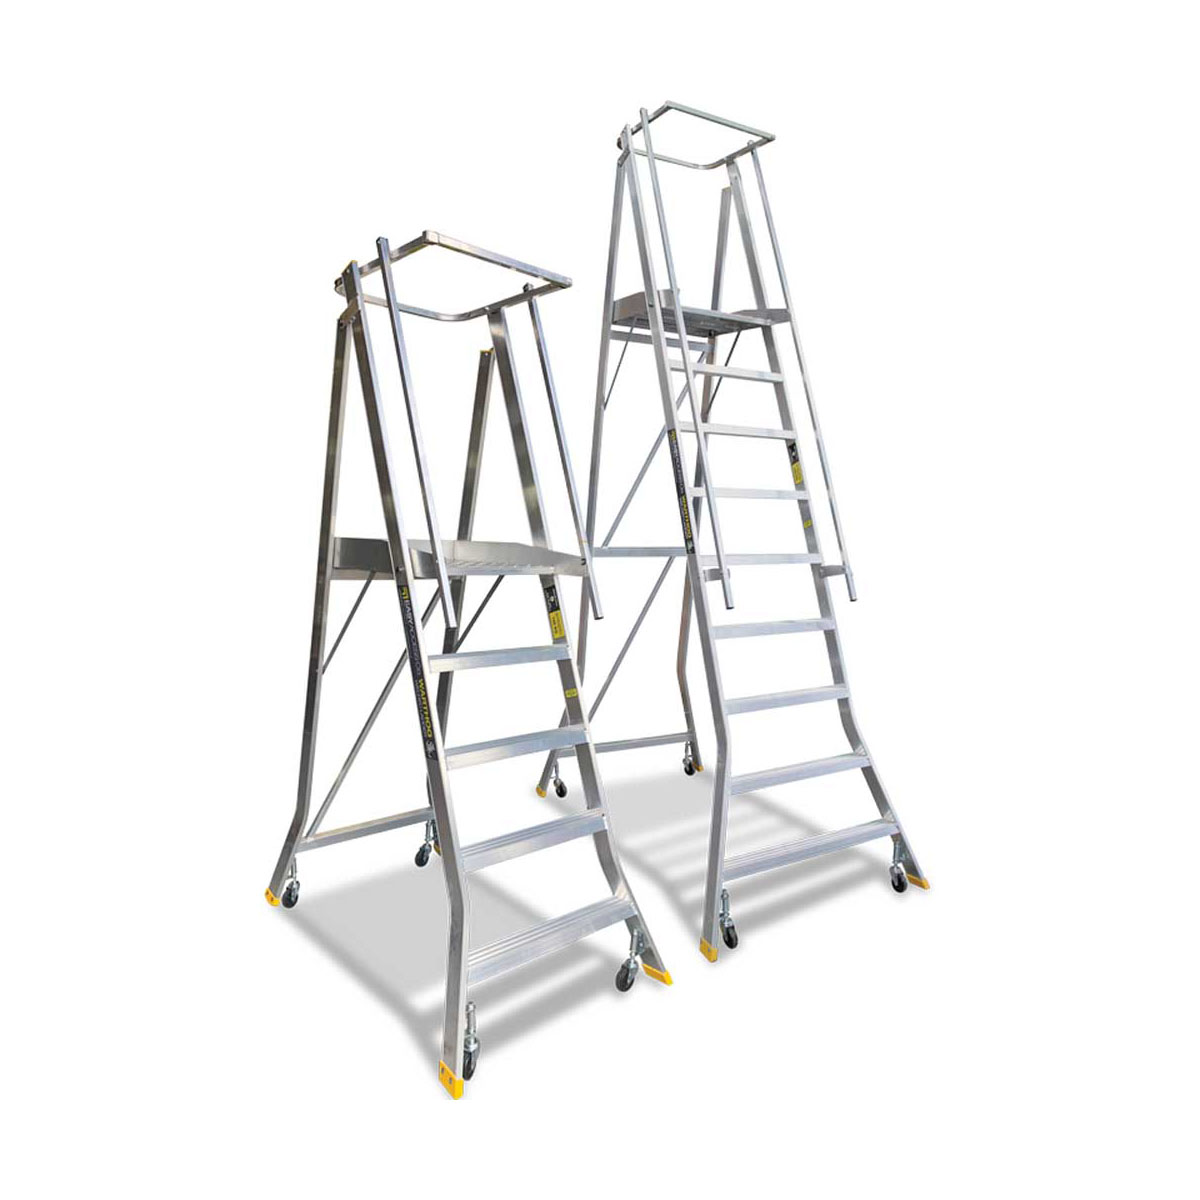 Buy Platform Ladders - Spring-Wheel  in Platform Ladders from Warthog available at Astrolift NZ